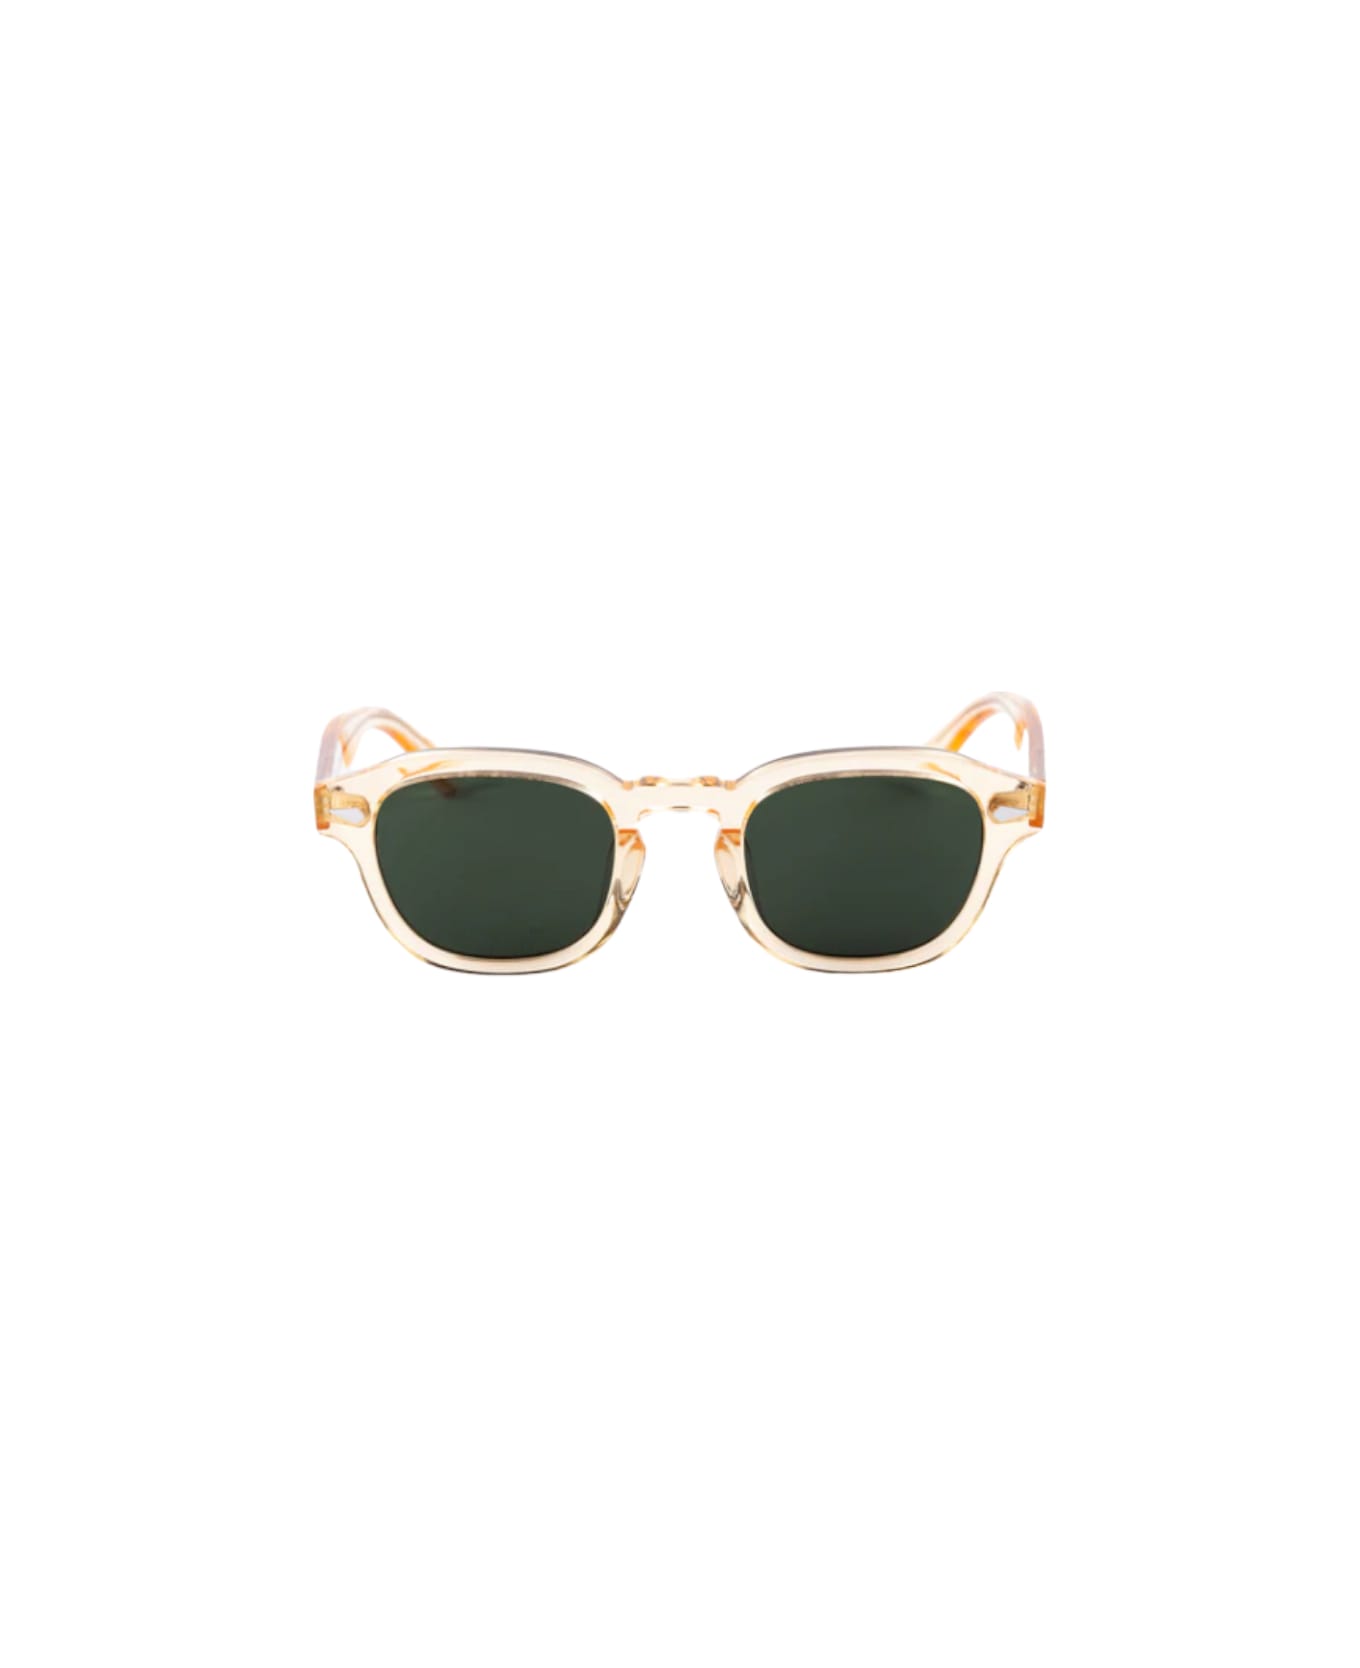 Lesca Posh - Champagne - 186 Sunglasses サングラス